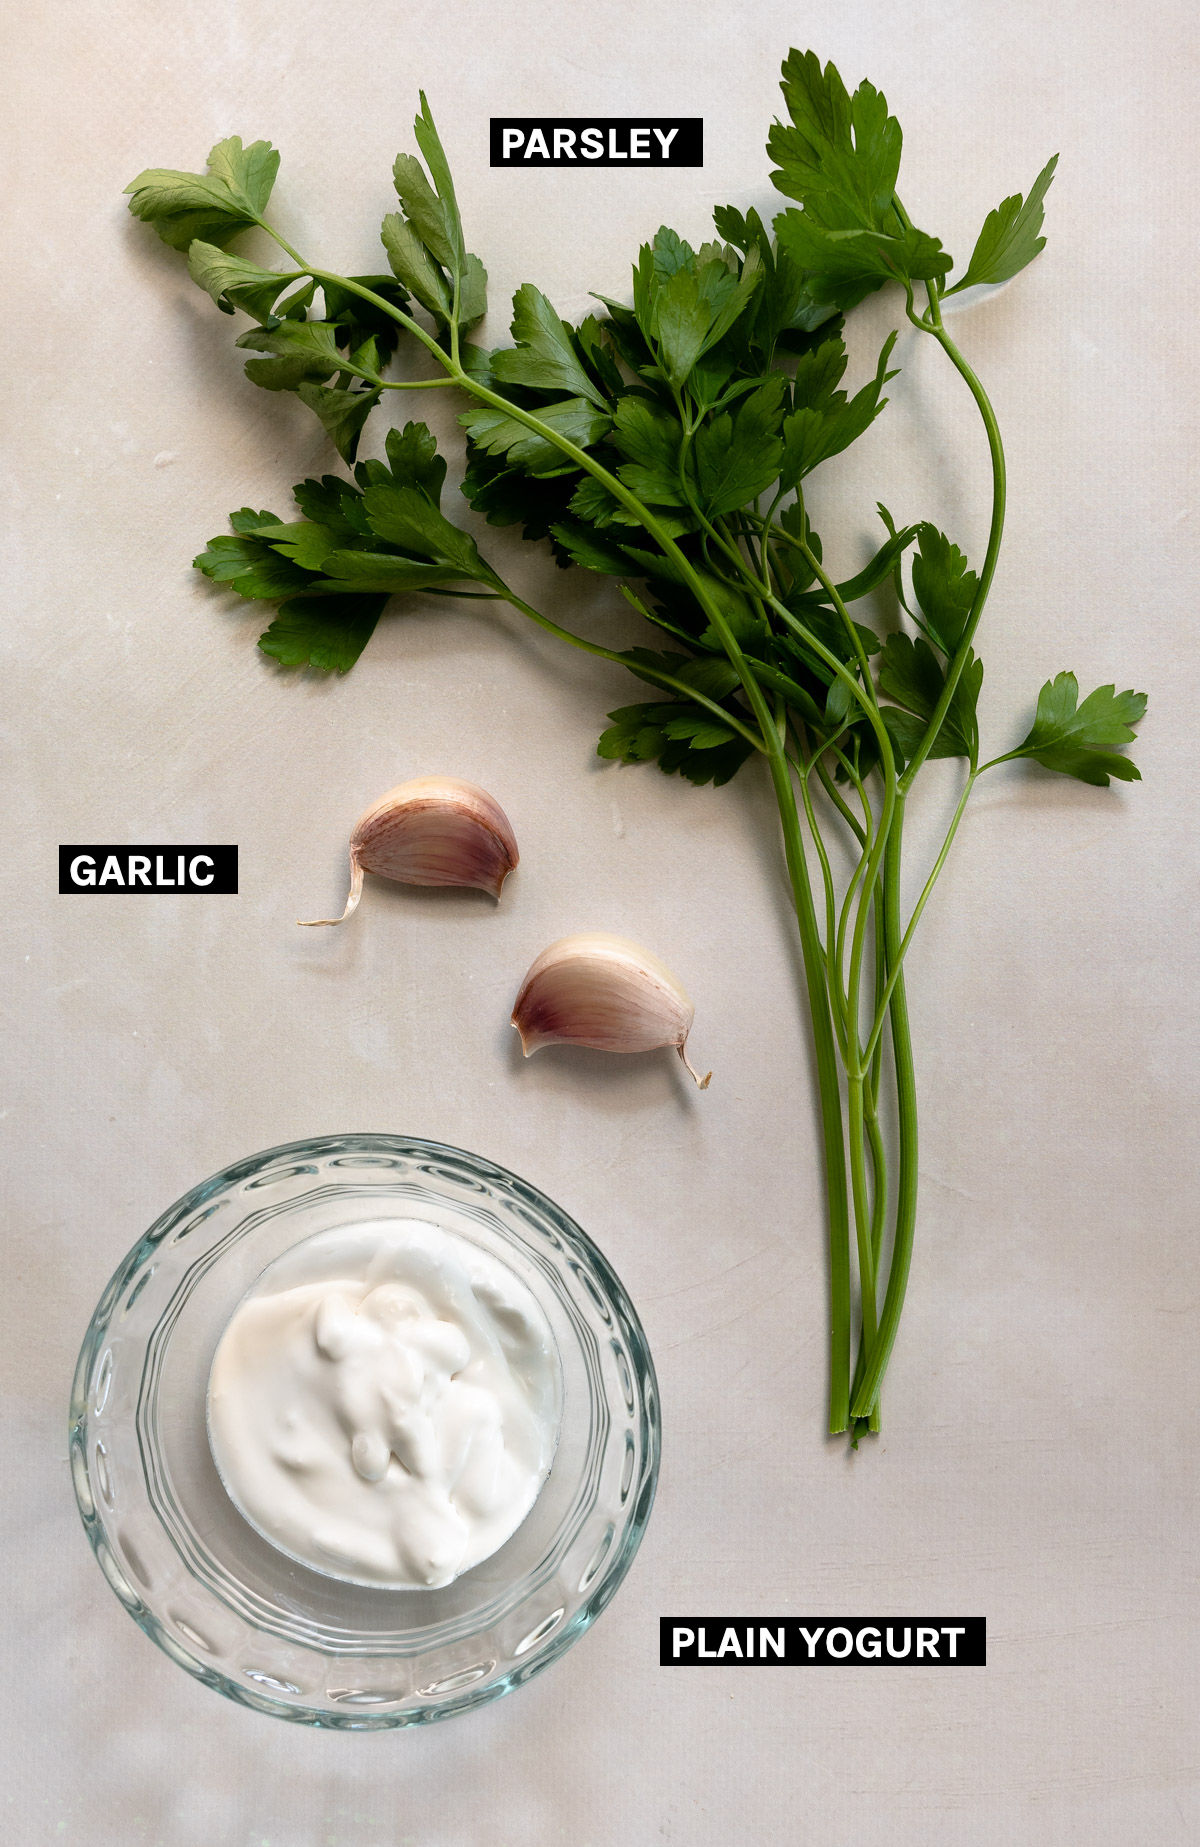 parsley, garlic and plain yogurt laid out